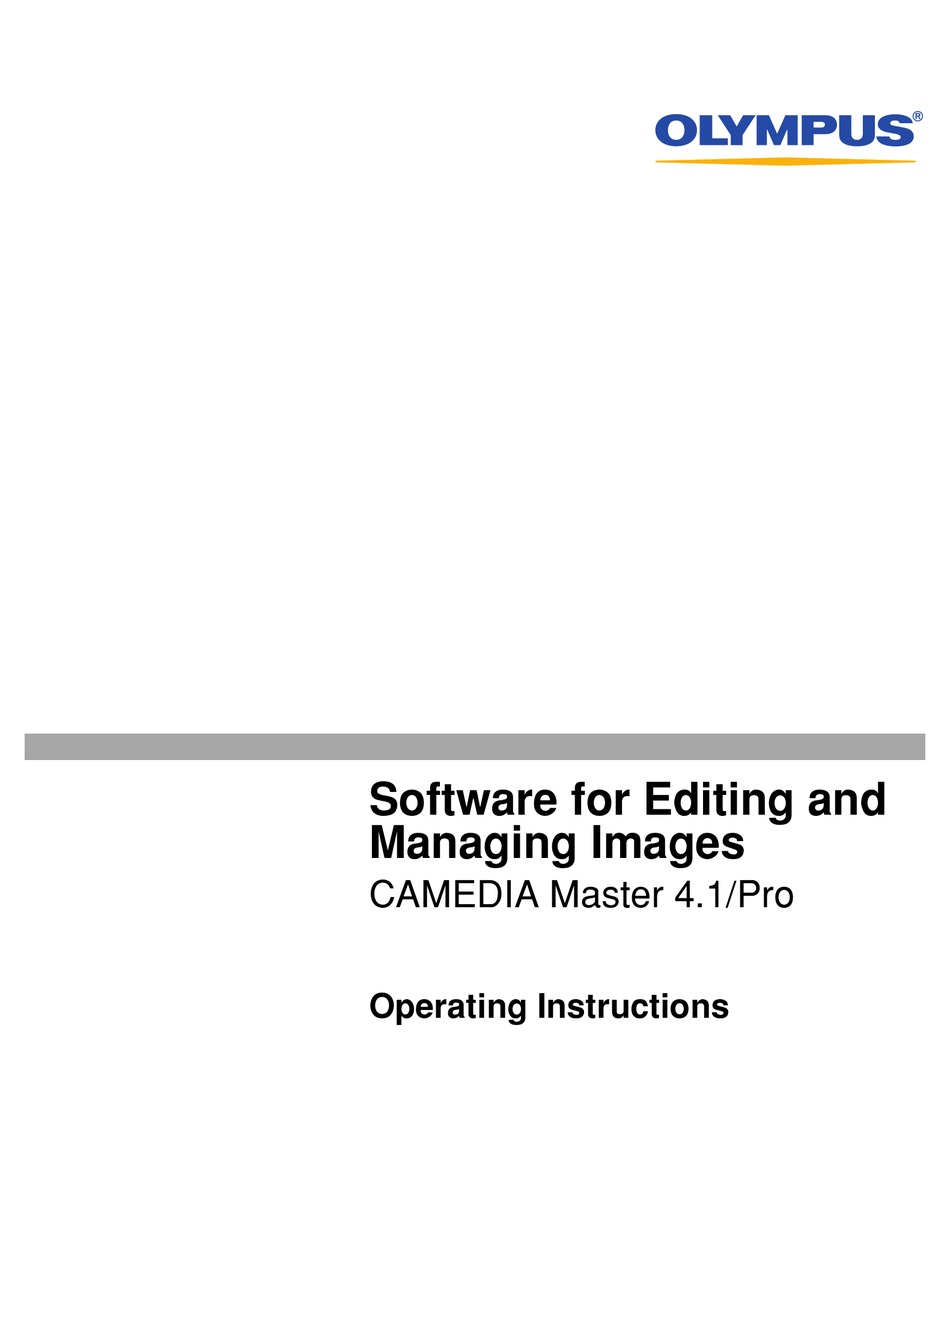 free download olympus master 2 software